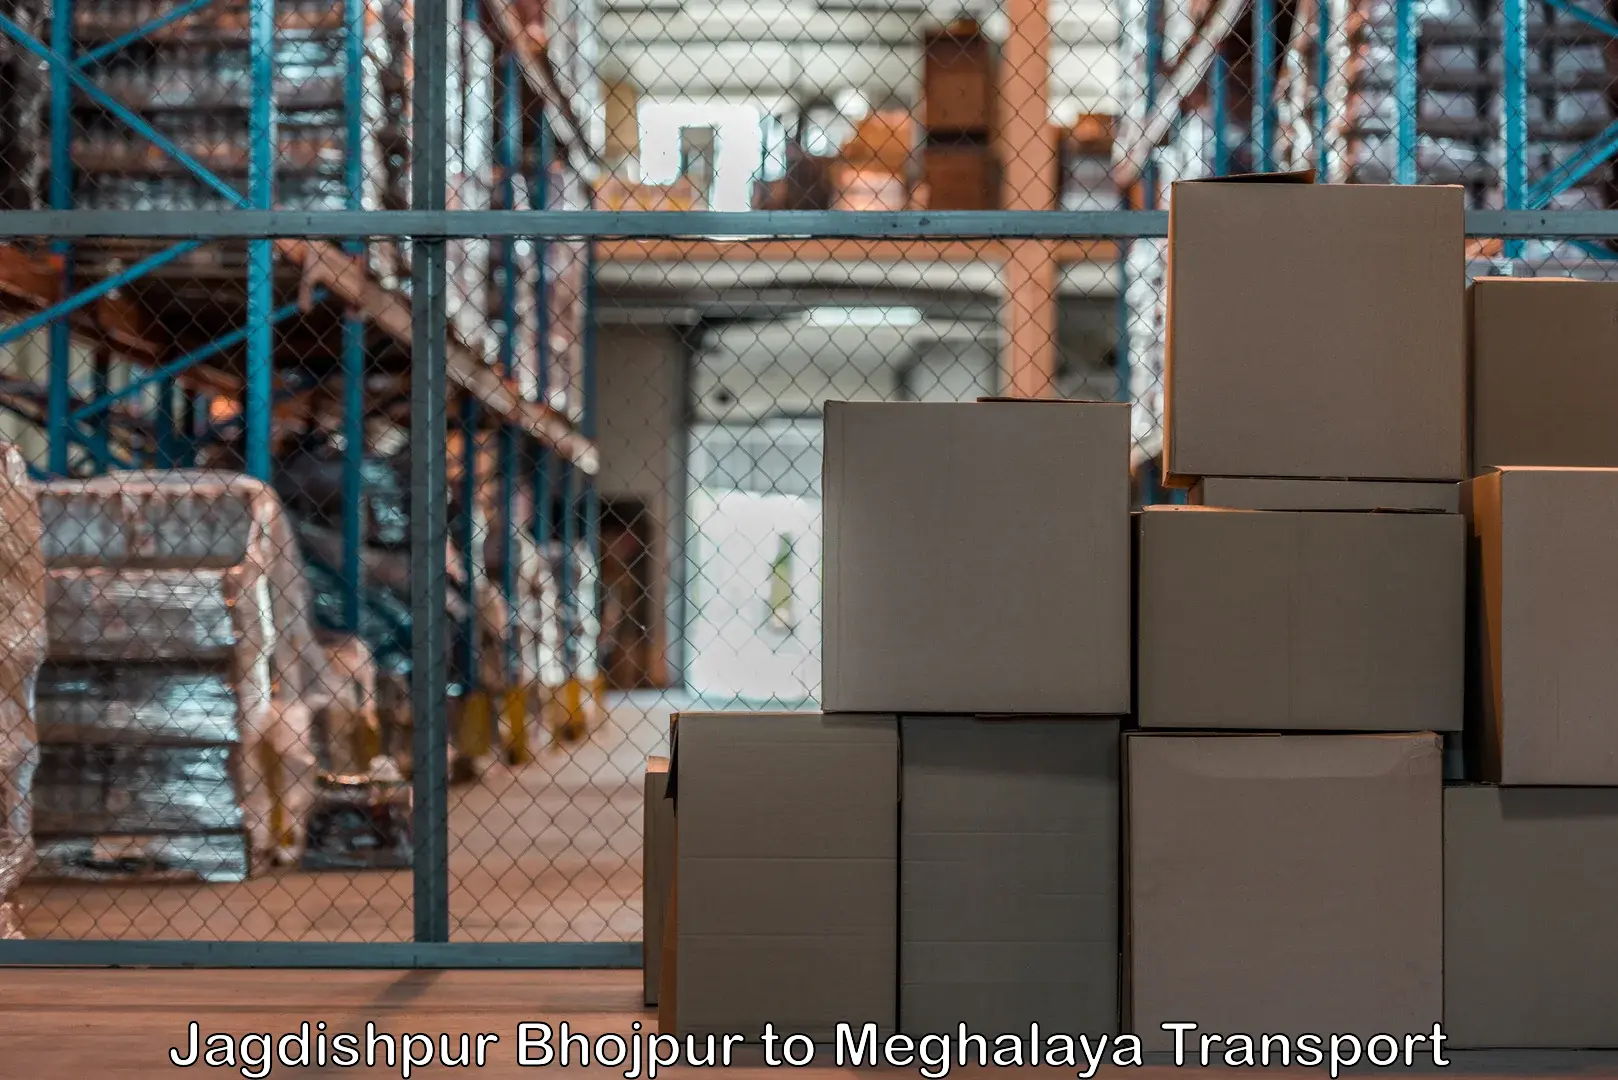 Shipping partner Jagdishpur Bhojpur to Meghalaya